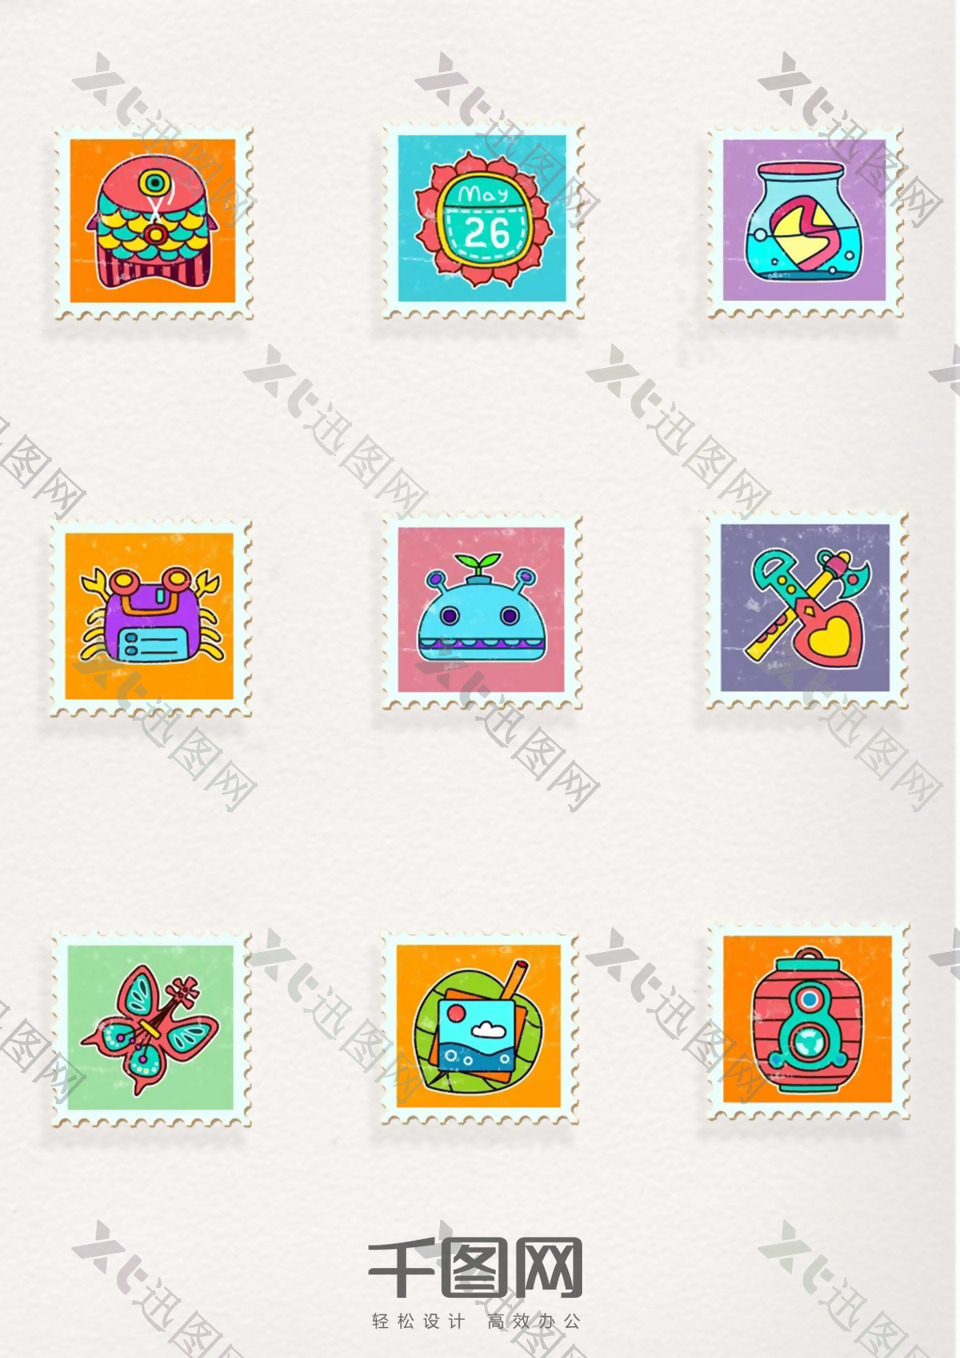 UI图案邮票元素装饰